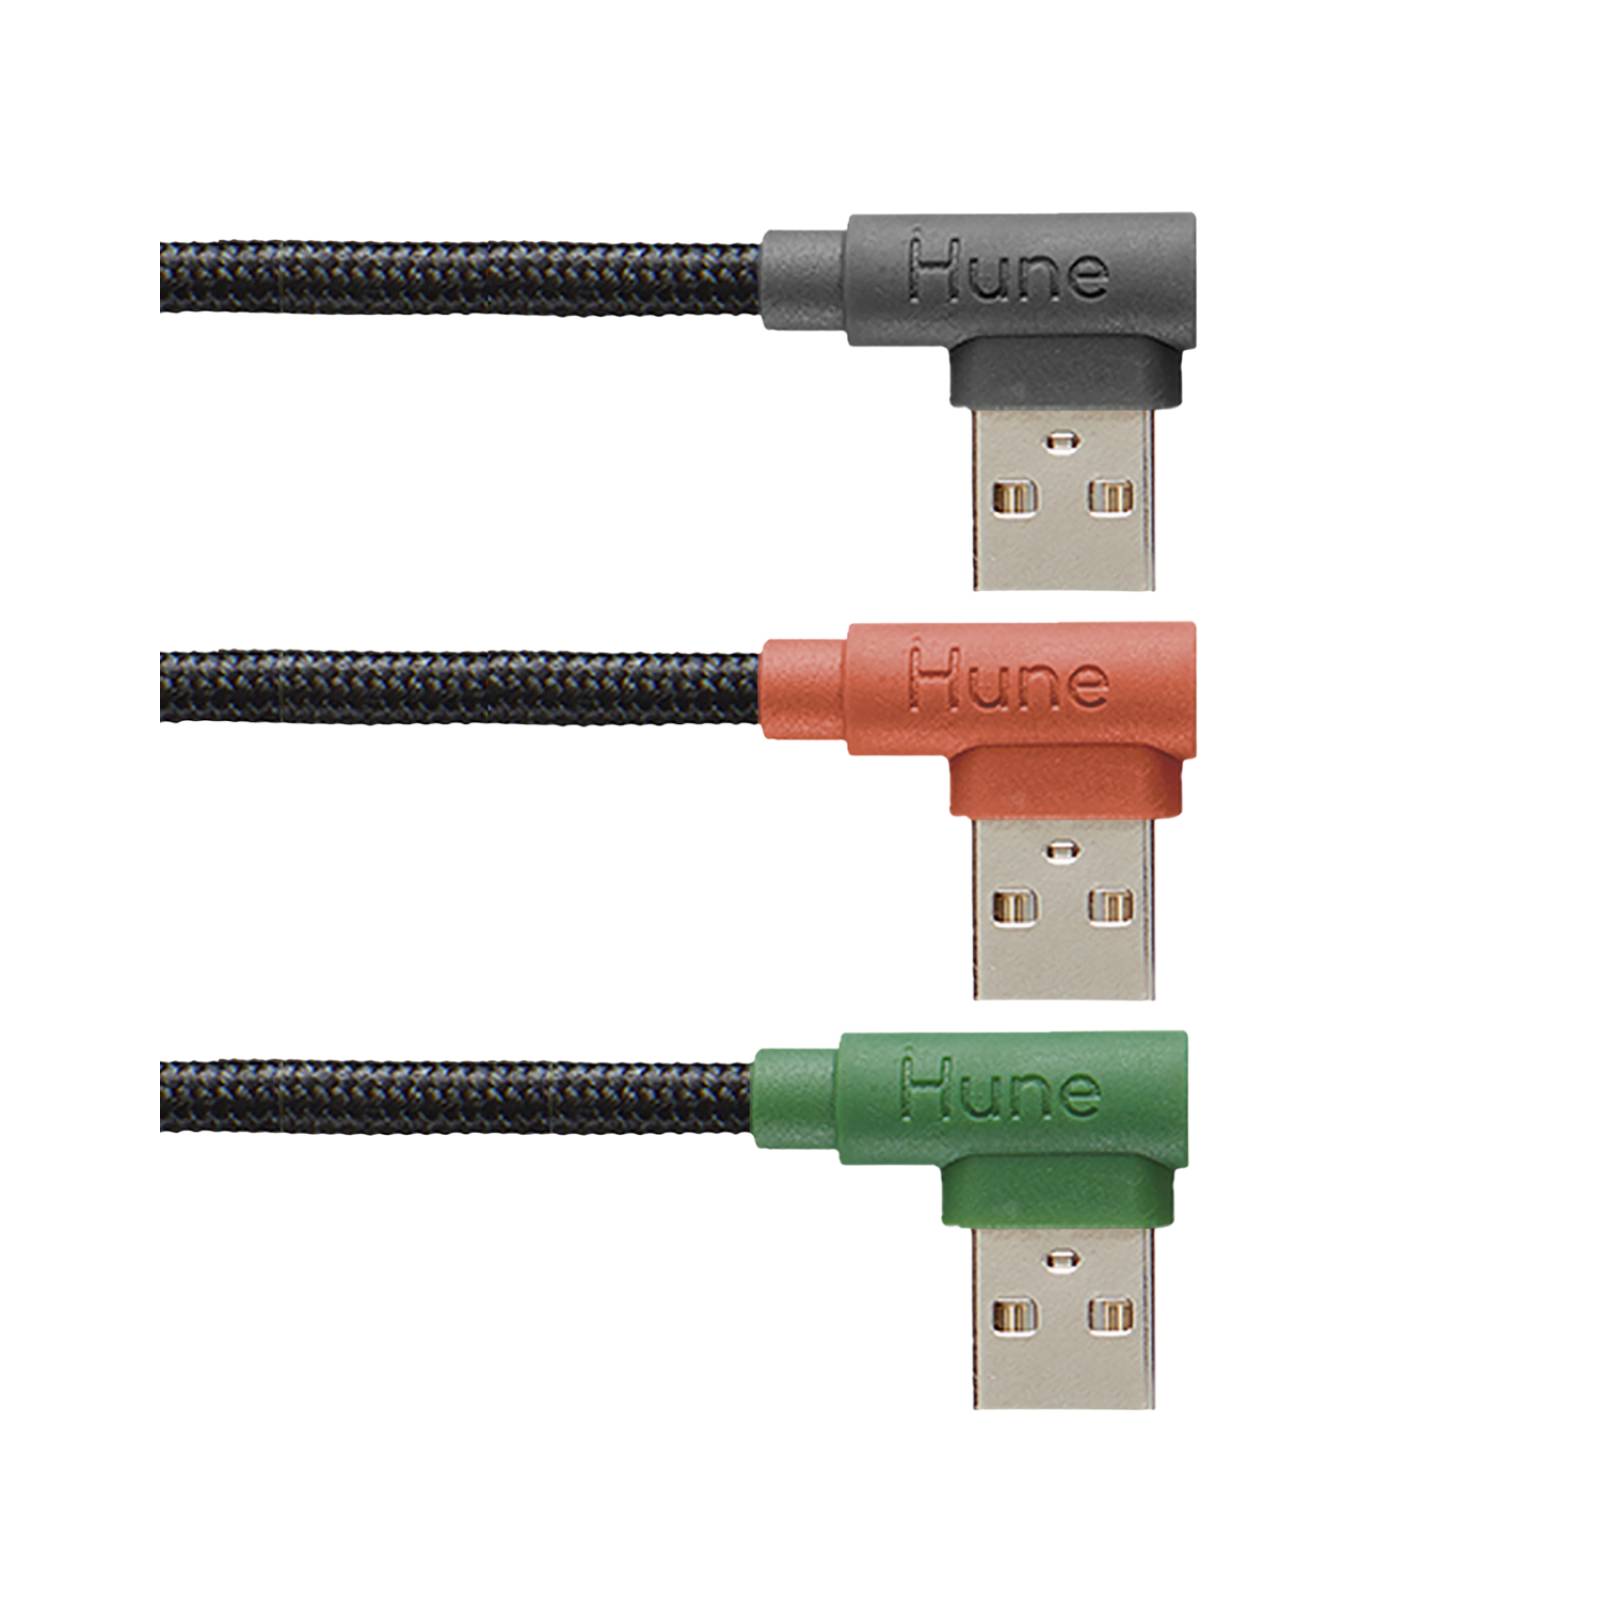 Cable USB A a Micro USB Carga Rápida 1.2m Sustentable –